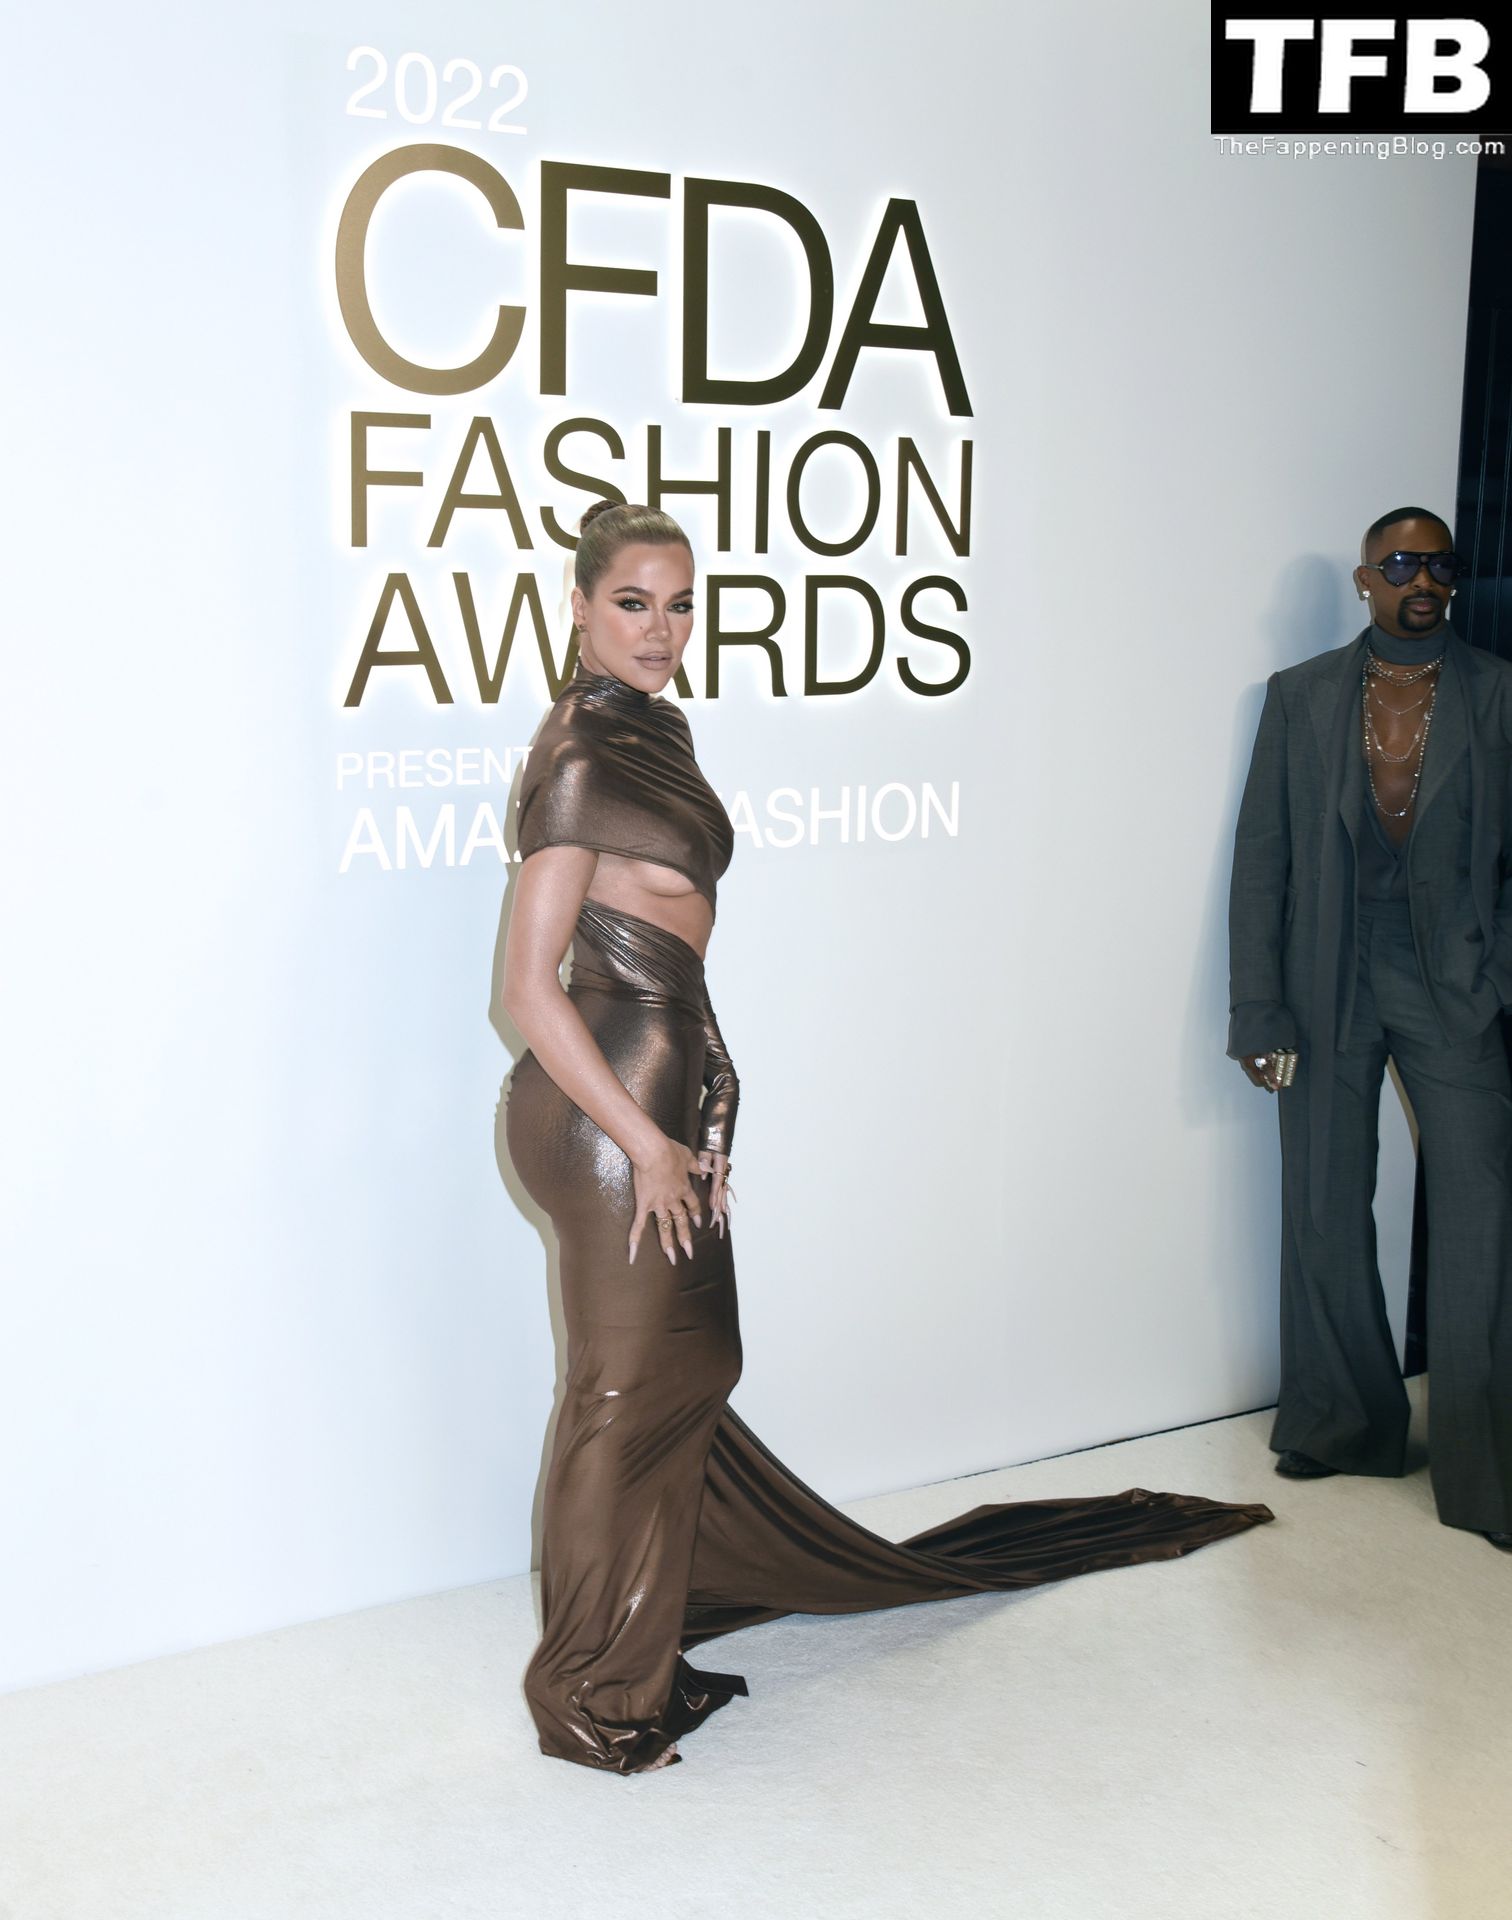 Khloe Kardashian Sexy Tits The Fappening Blog 16 - Khloe Kardashian Shows Off Her Underboob at the 2022 CFDA Fashion Awards (110 Photos)